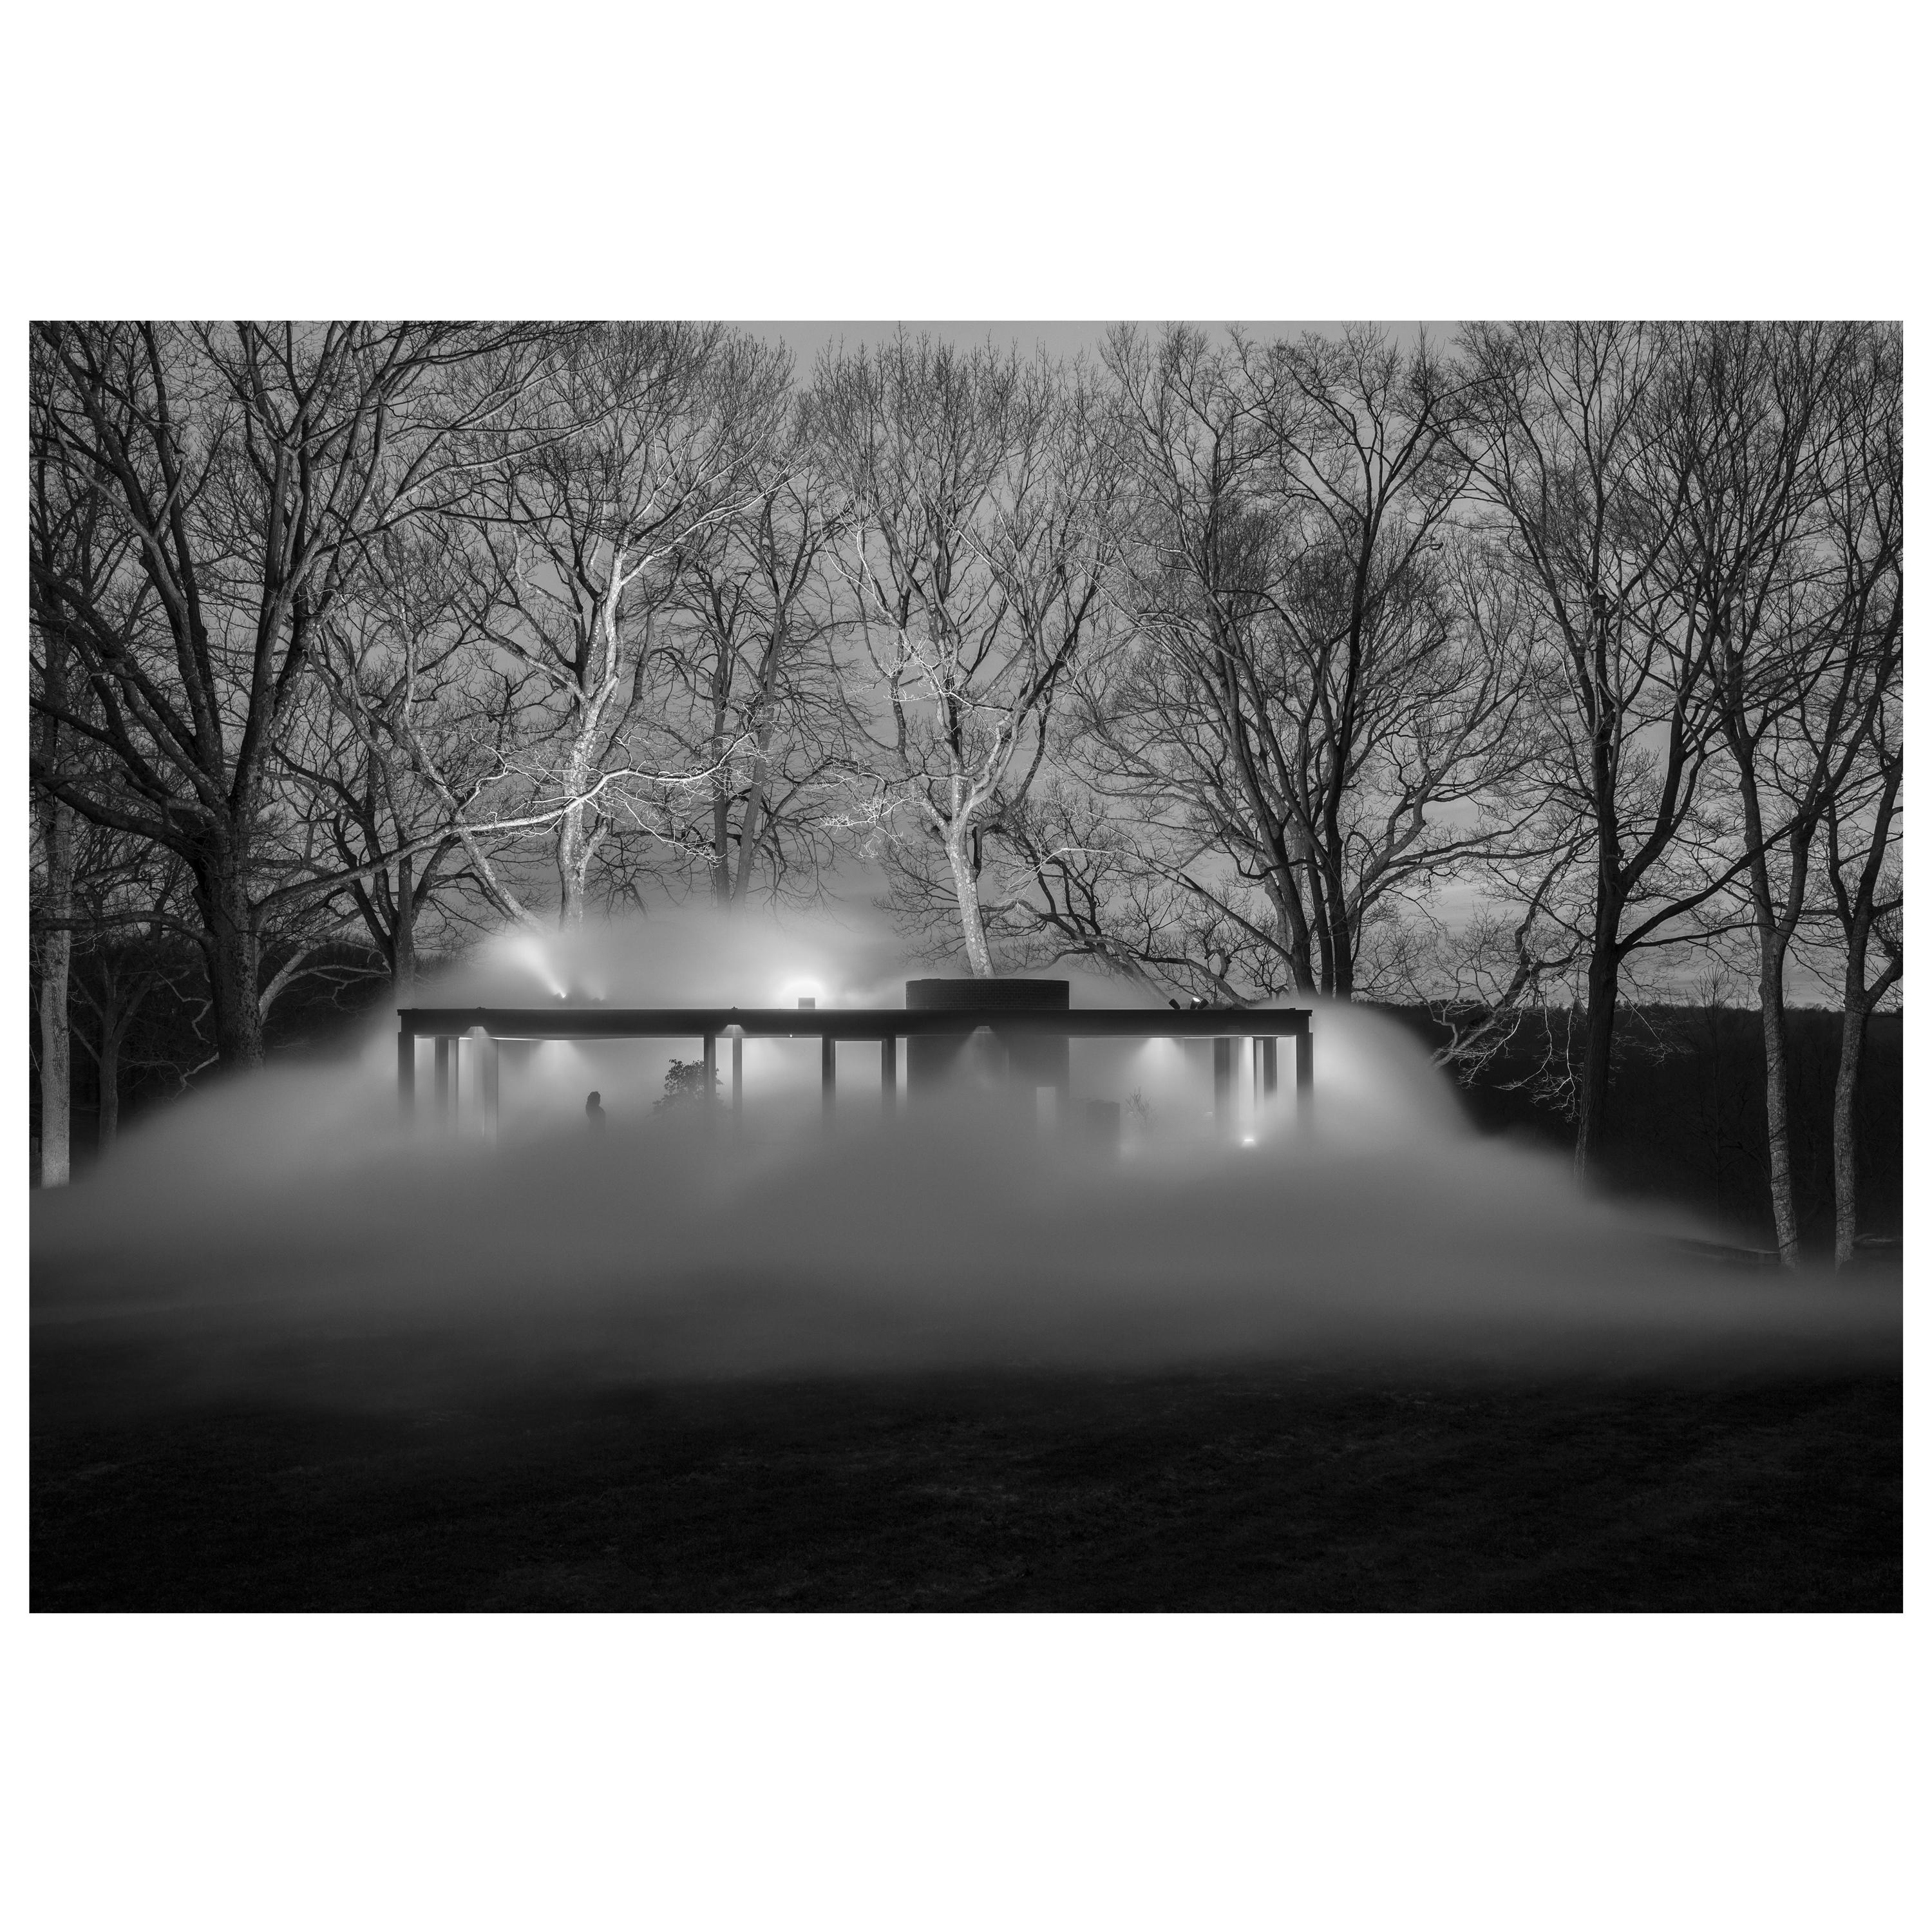 Glass House, Veil, 2014 Photograph by Richard Barnes